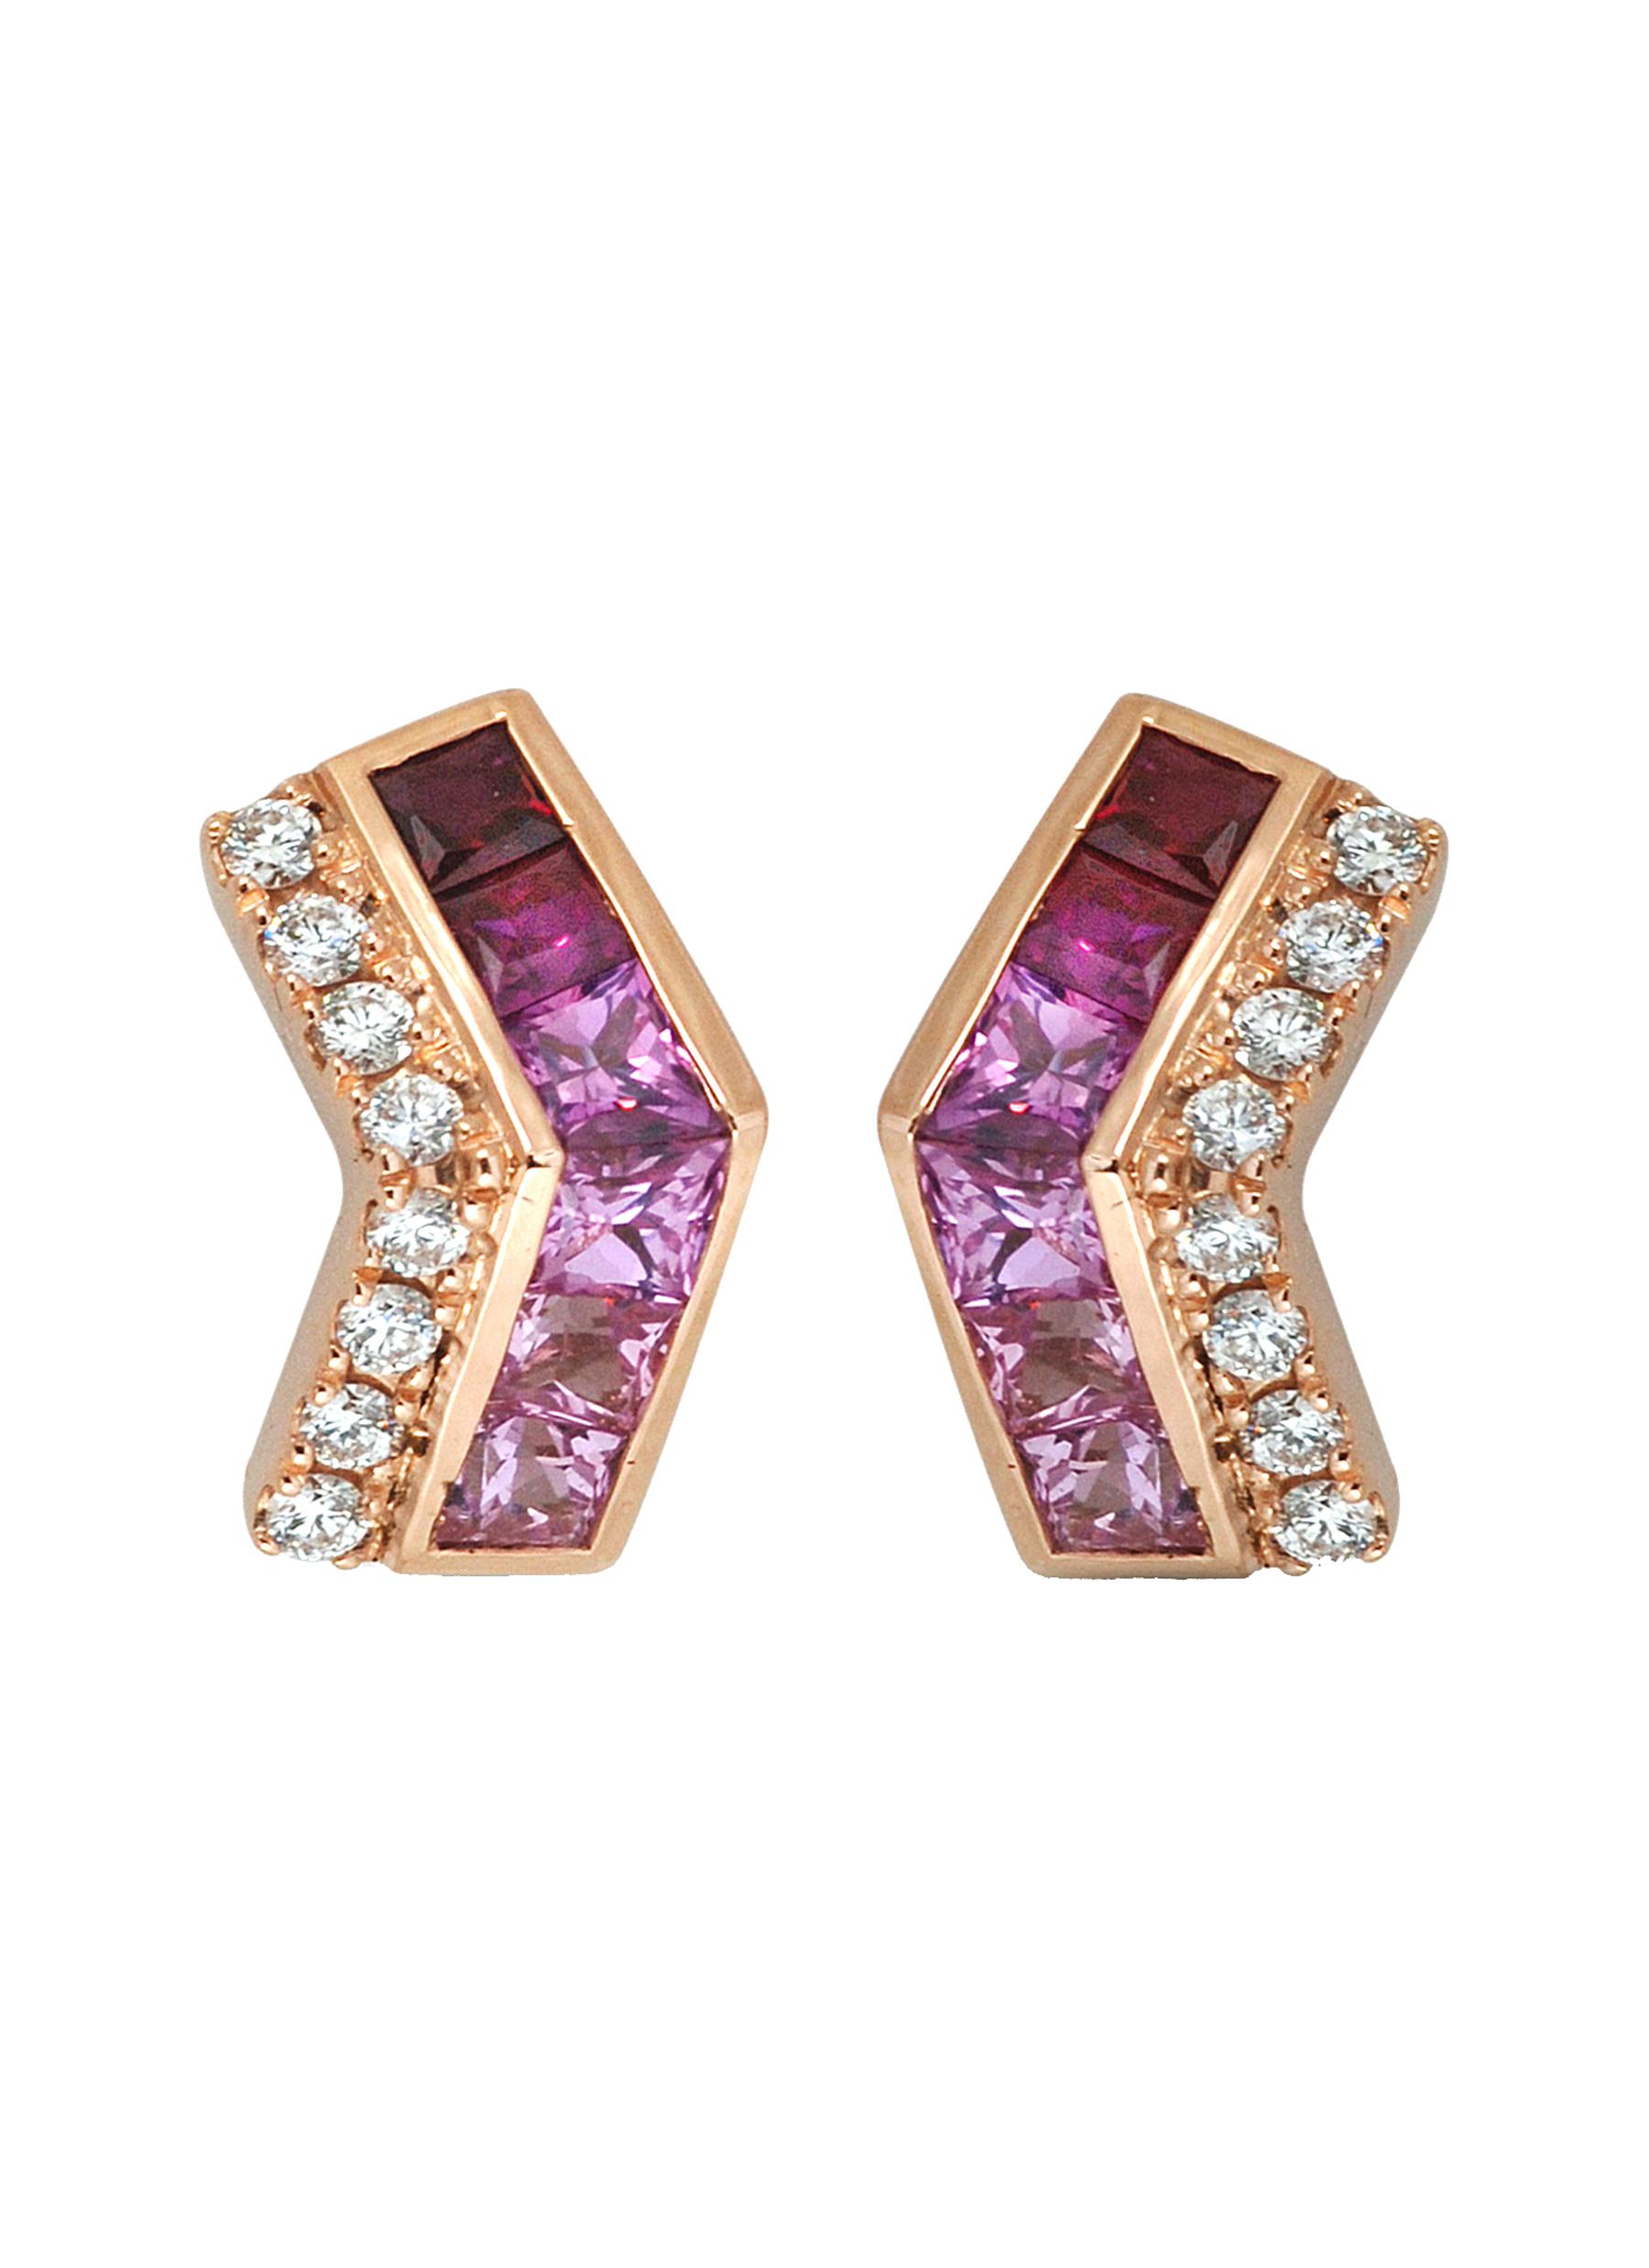 KAVANT & SHARART ‘Origami Ziggy' Diamond Pink Sapphire 18K Rose Gold V-Stud Earrings